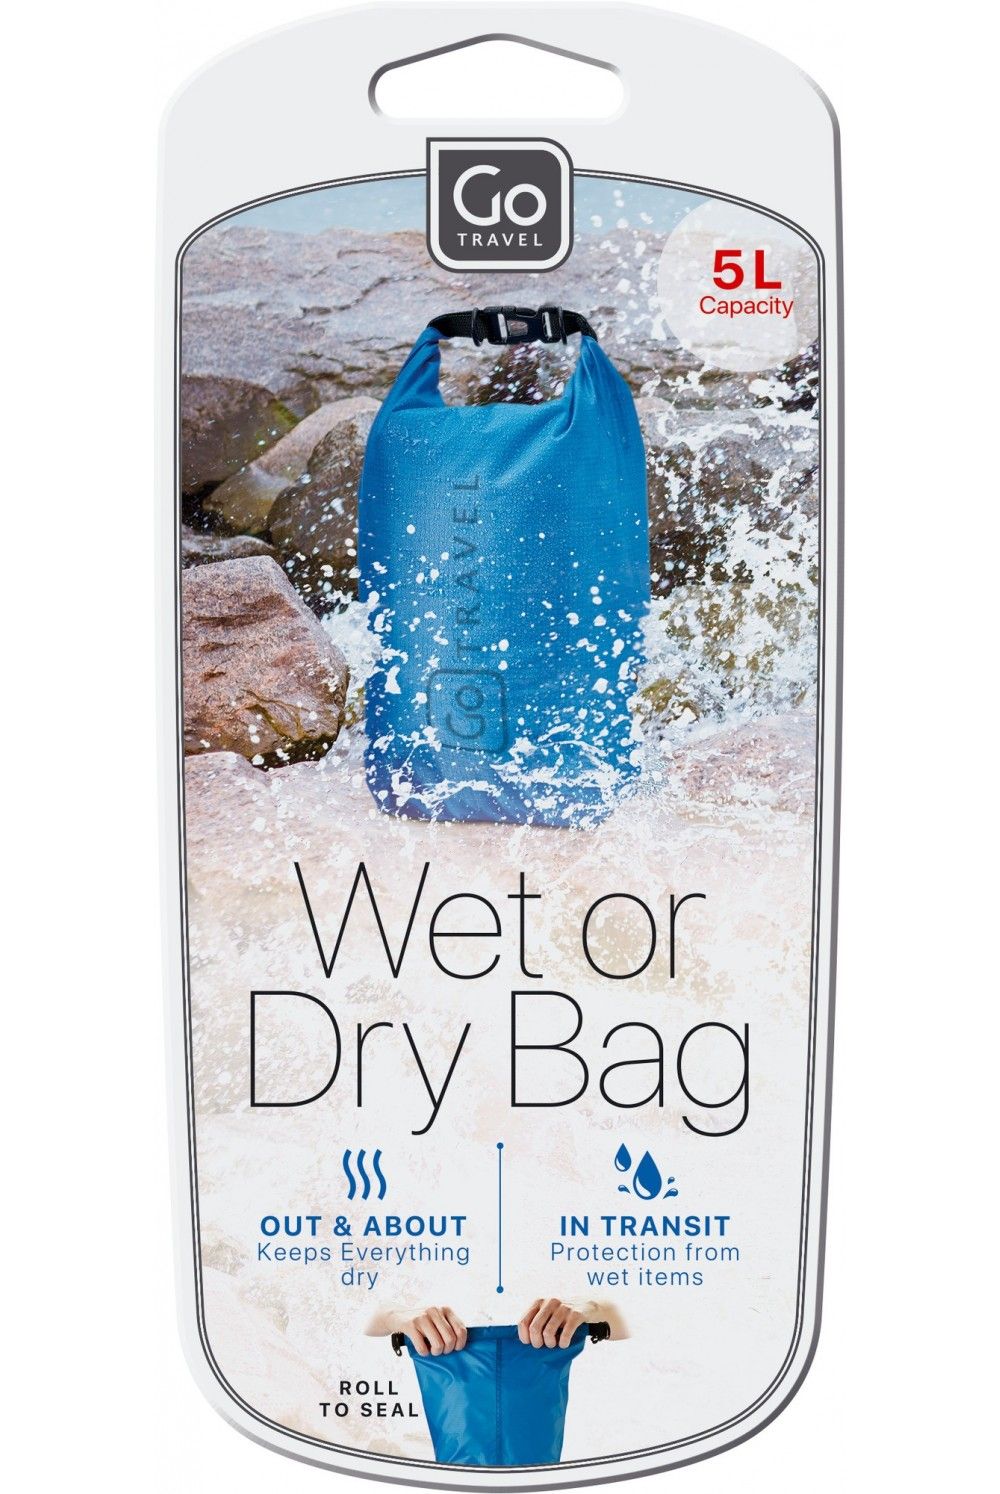 Go Travel wet or dry bag 5 liters